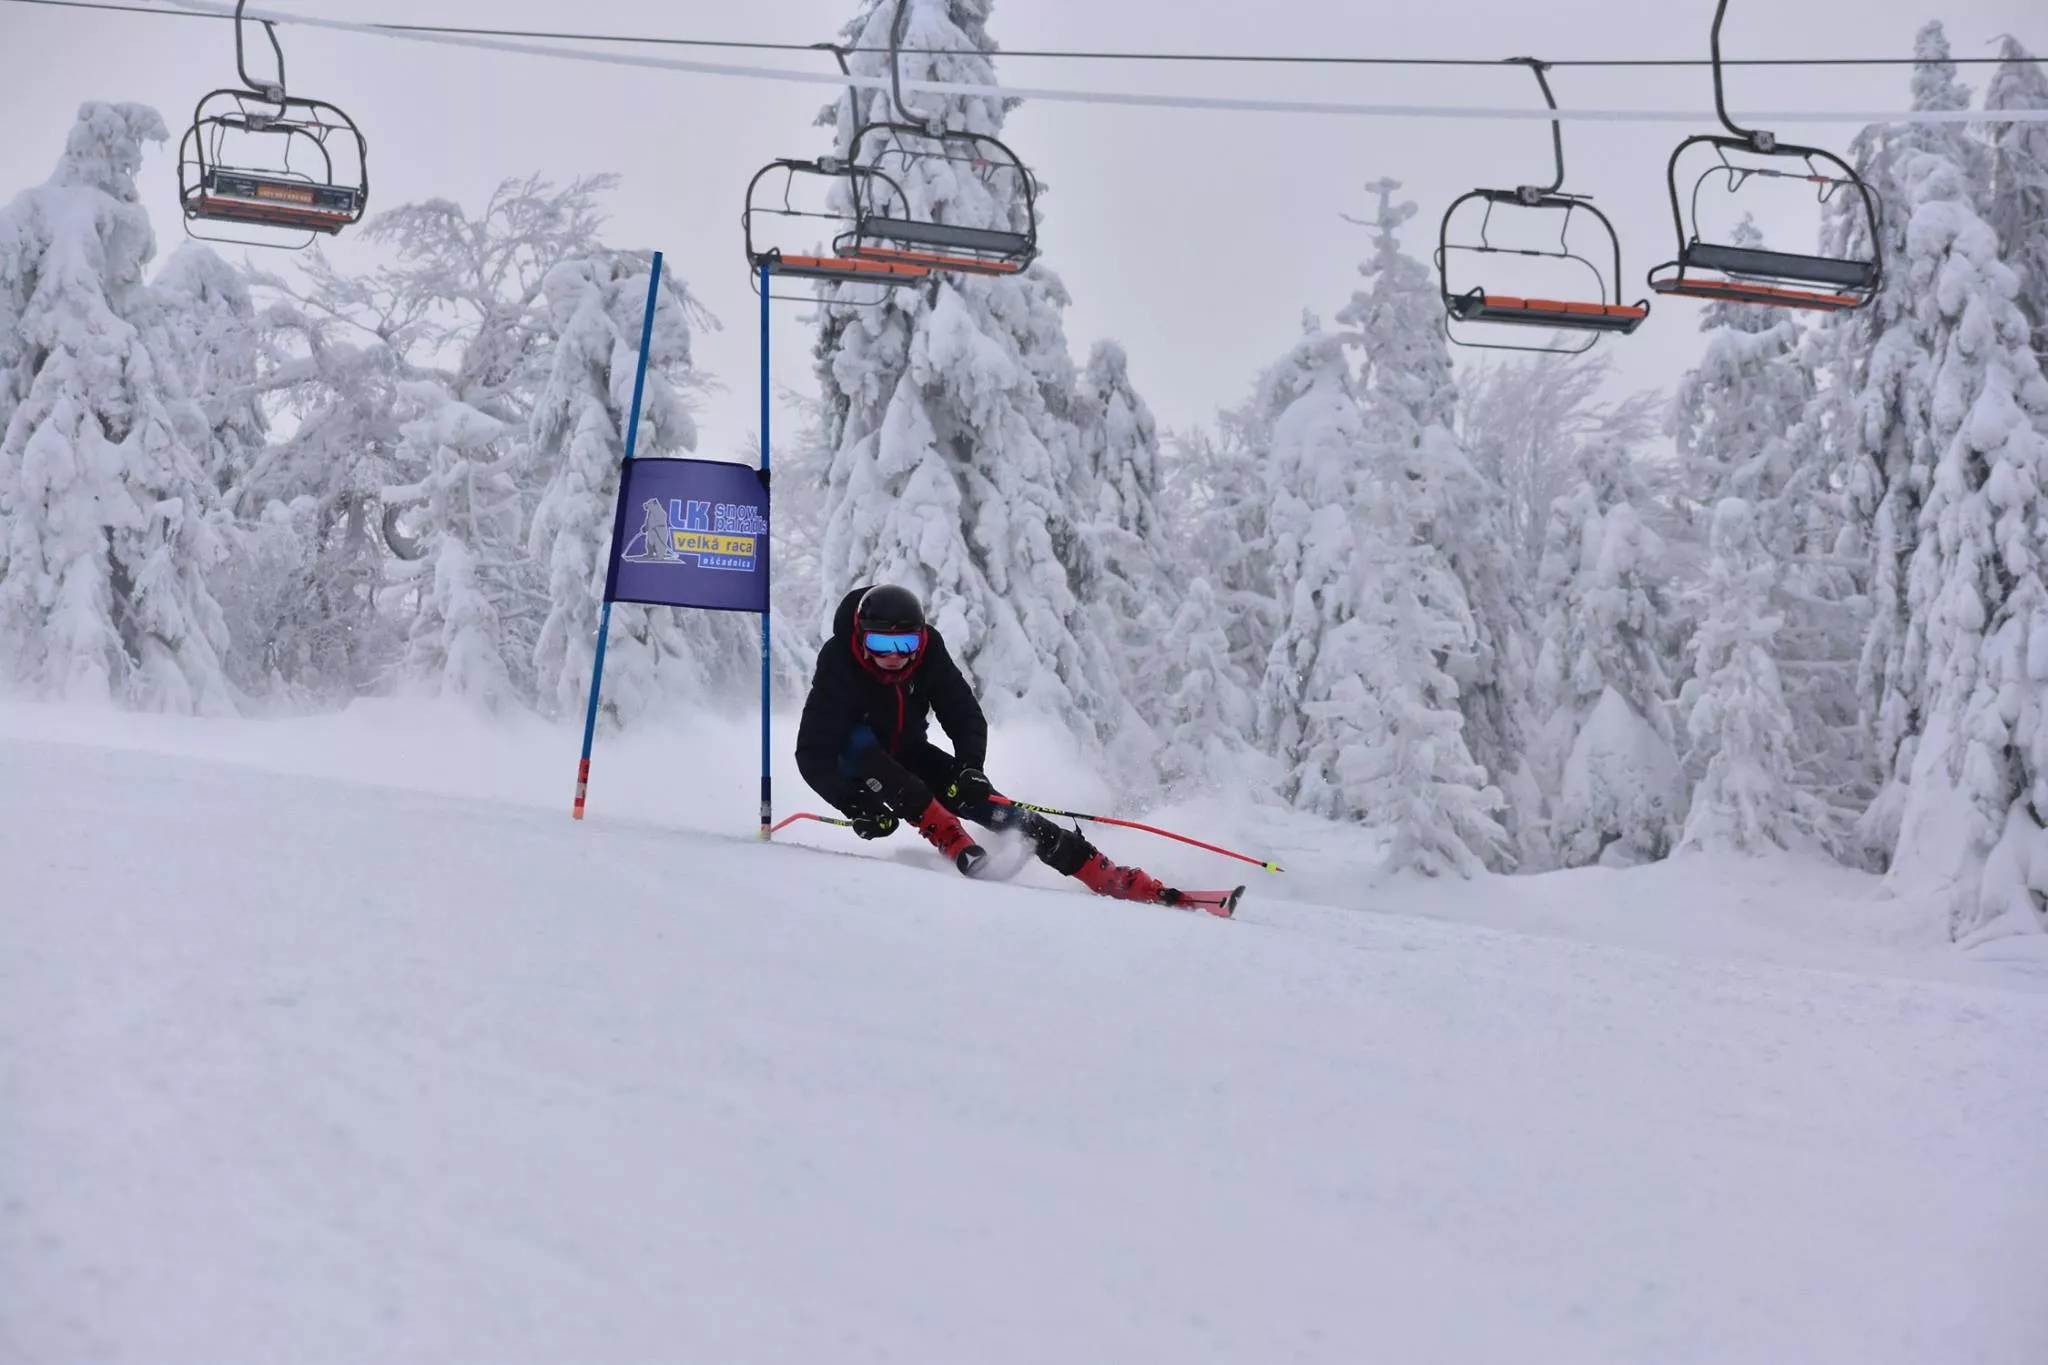 Snowparadise Veľka Raca in Slovakia, Europe | Snowboarding,Skiing - Rated 4.2